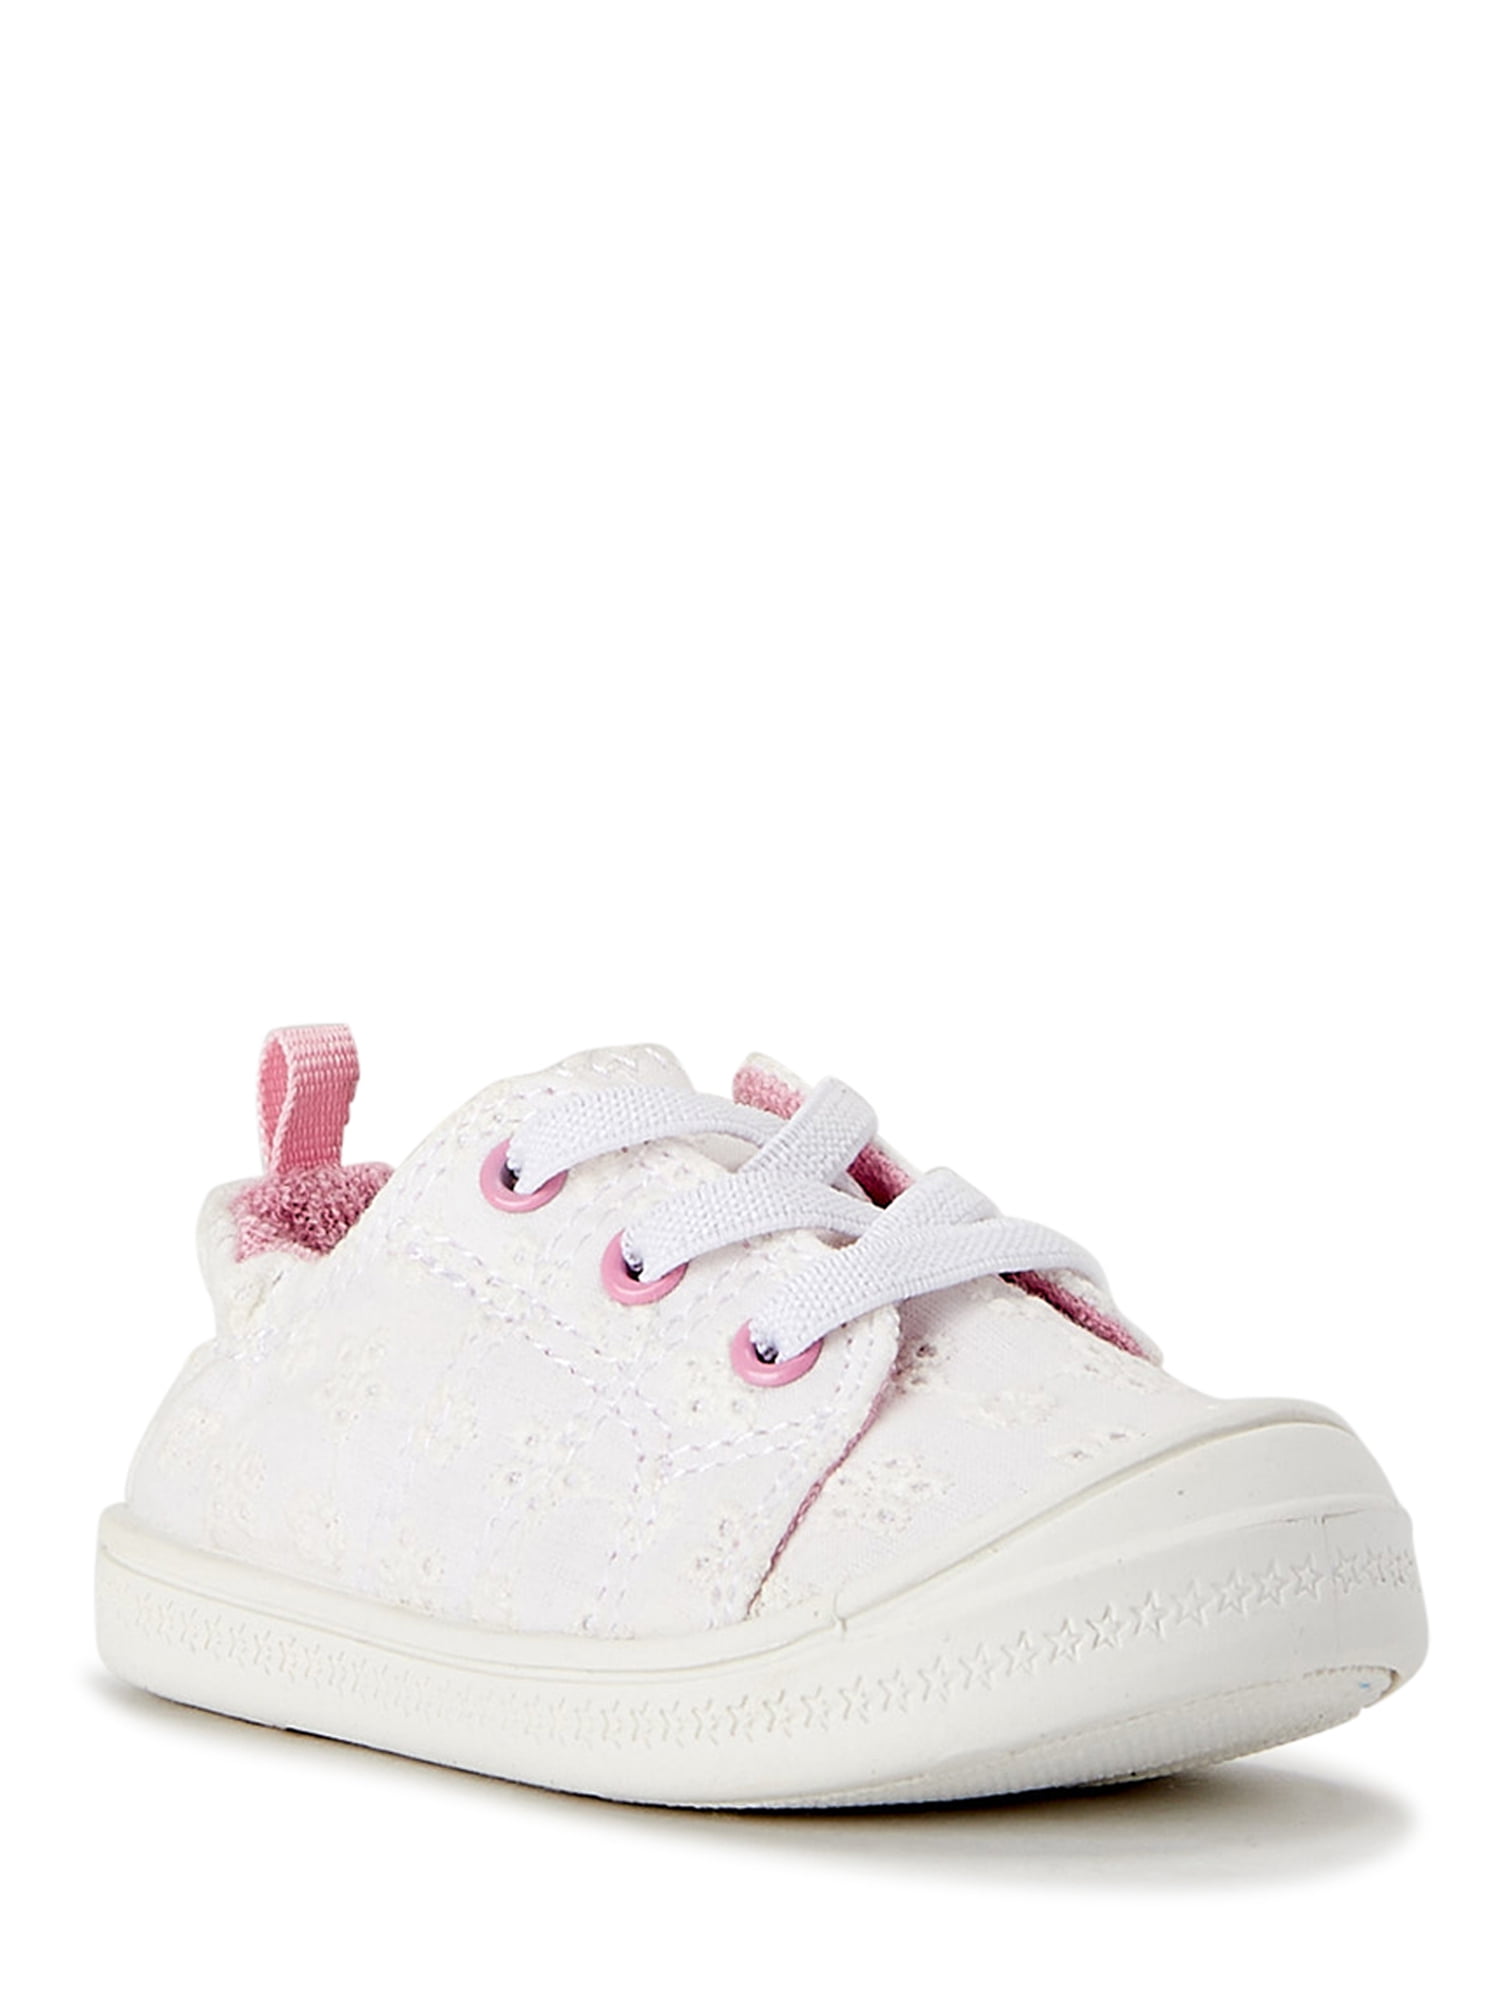 Wonder Nation Baby Girl Bump Toe Shoes, Sizes 2-6 - Walmart.com